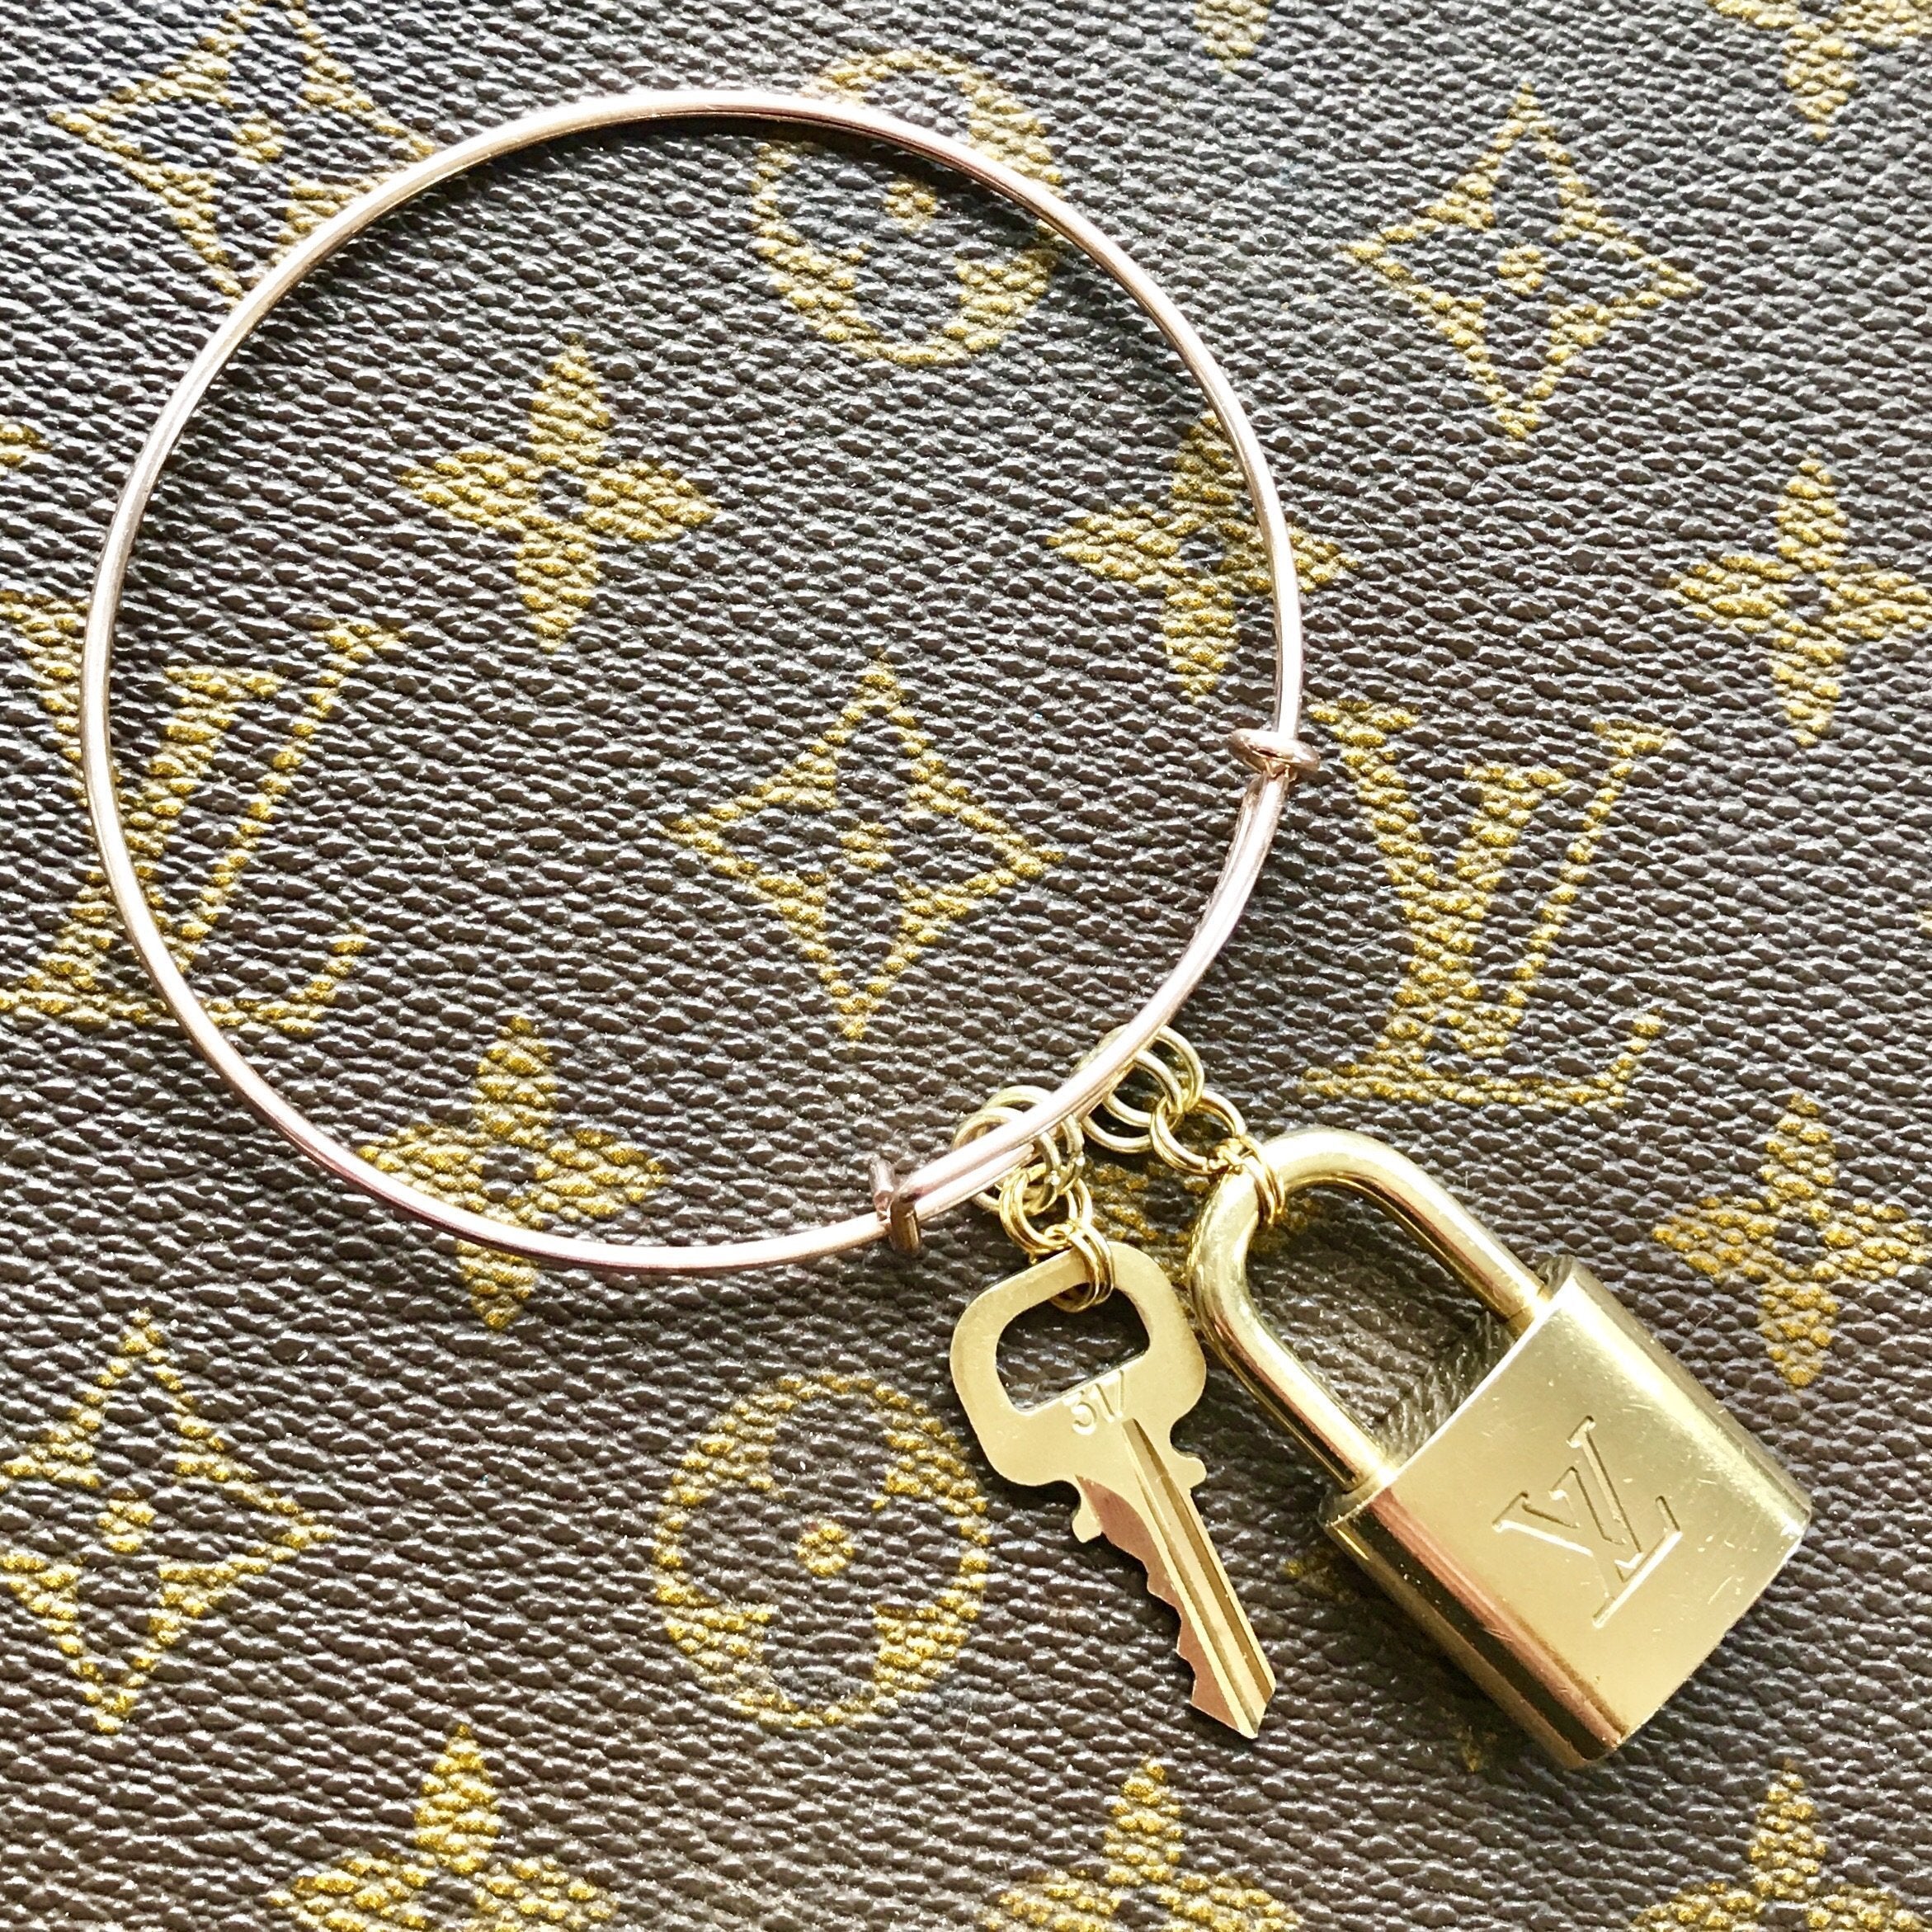 Louis Vuitton Lock Set Handmade Bracelet Current Lock Style/Rose Gold Tone Bangle / Brass/Rose Gold